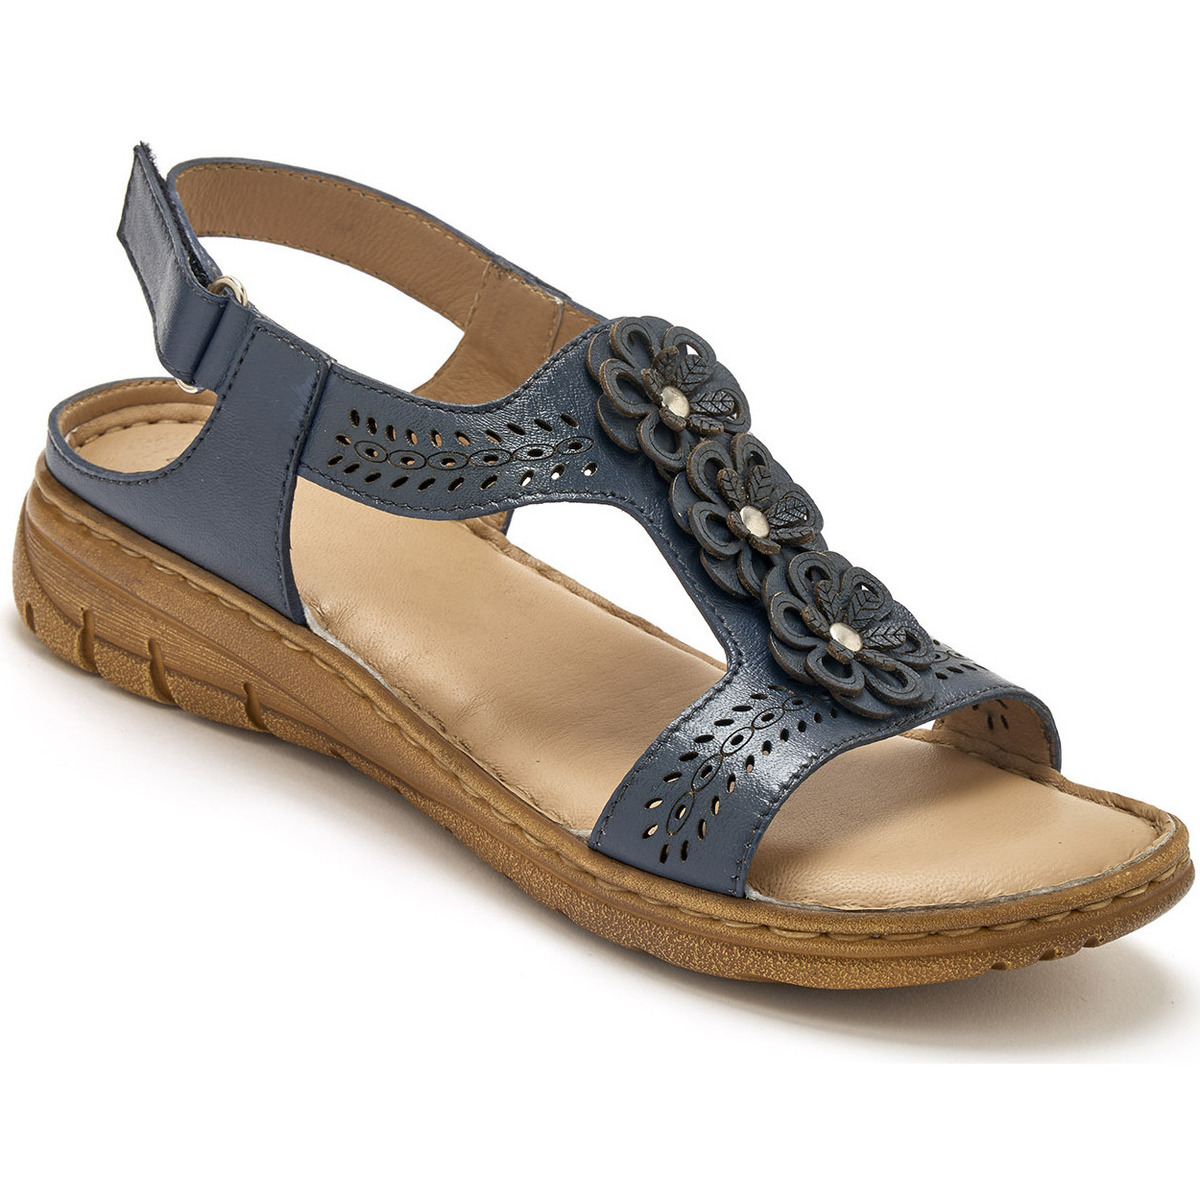 Chaussures Femme Tige : Cuir Pediconfort Sandales fantaisie cuir Bleu